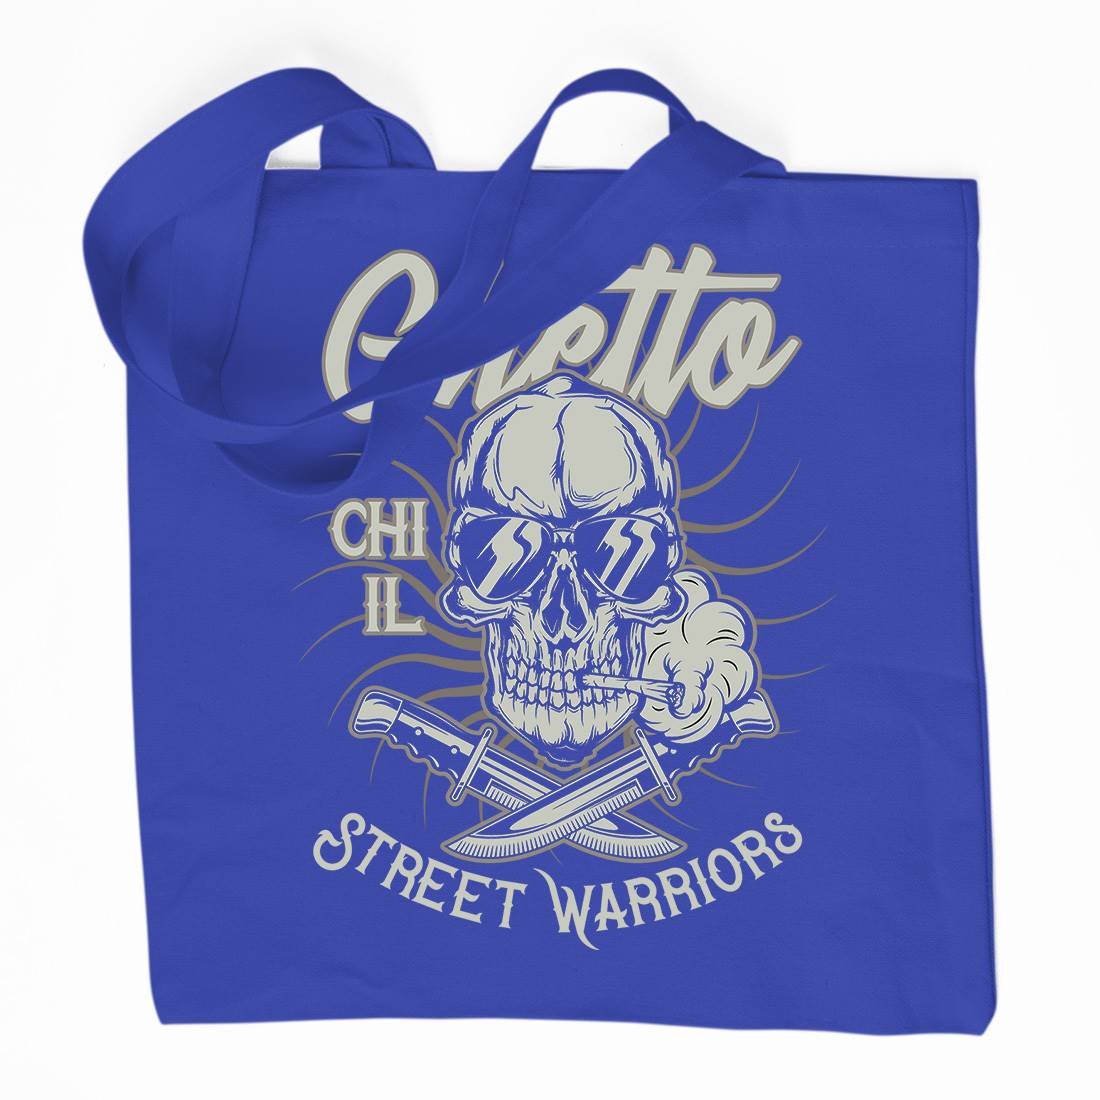 Ghetto Street Warriors Organic Premium Cotton Tote Bag Retro D937